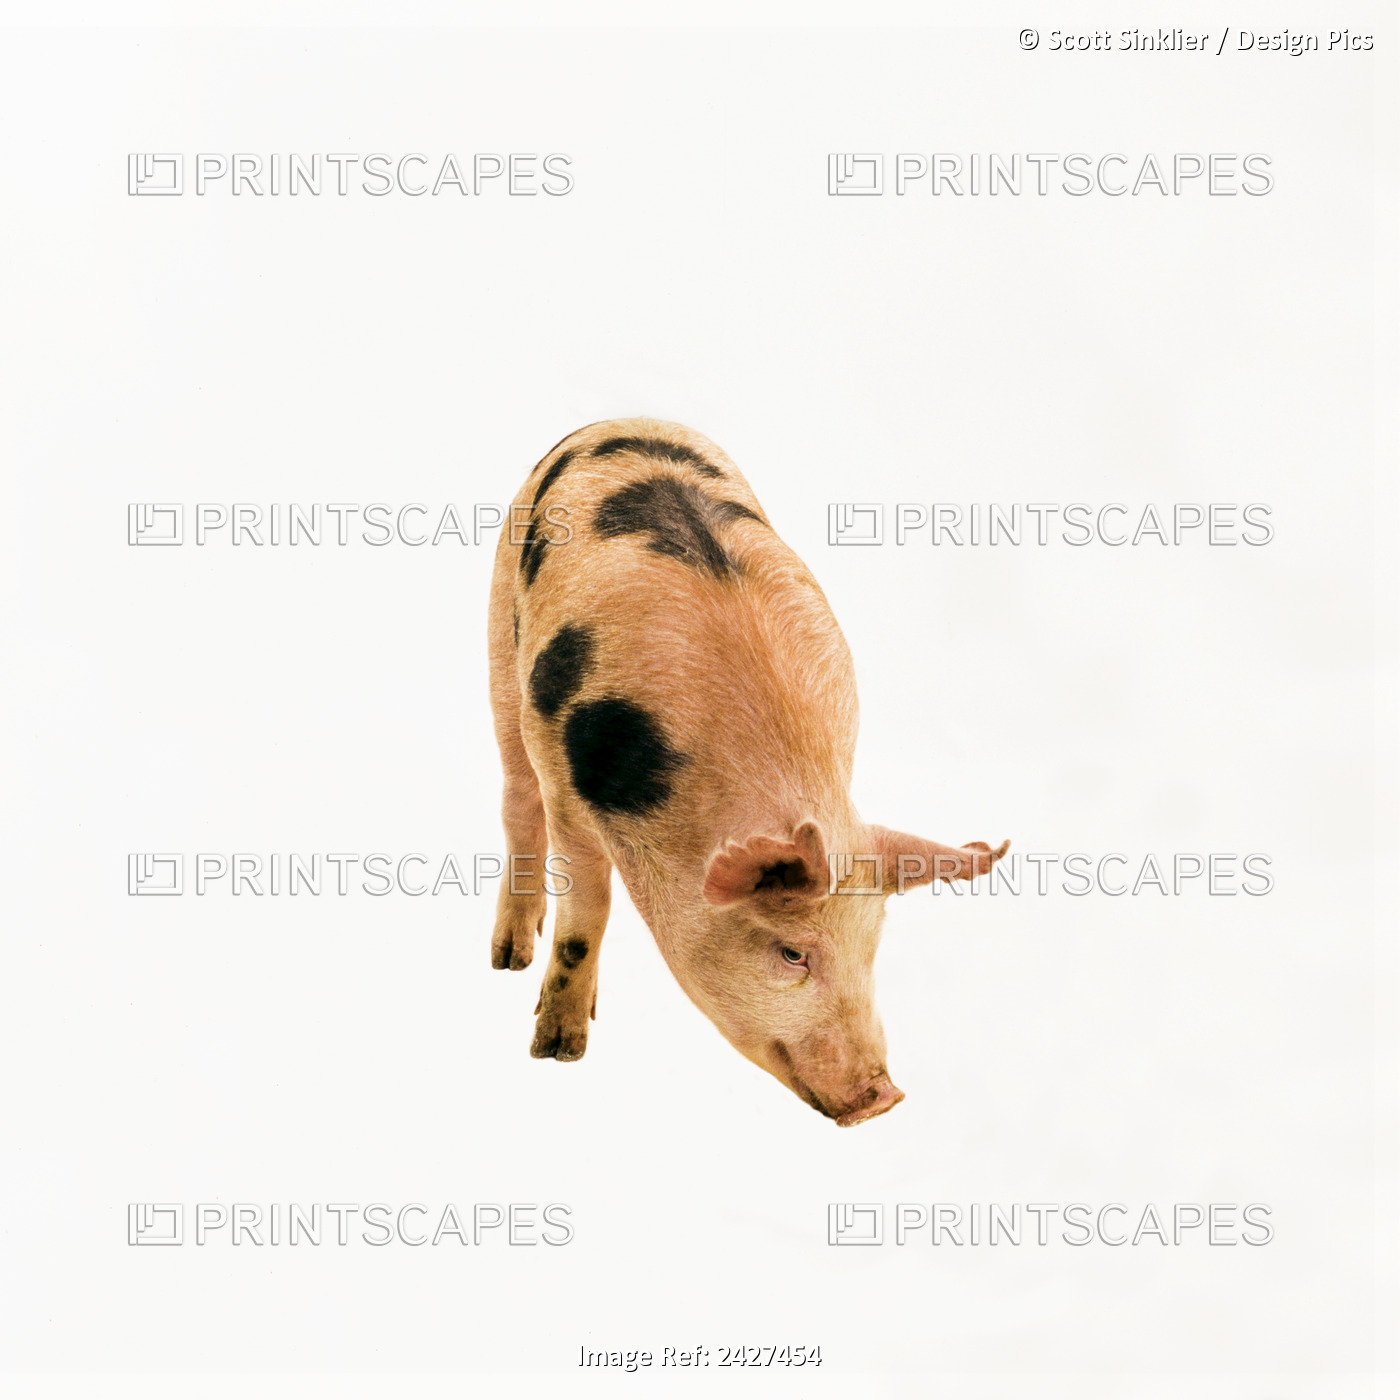 Livestock- A Mature Hog On A White Background / Iowa, Usa.